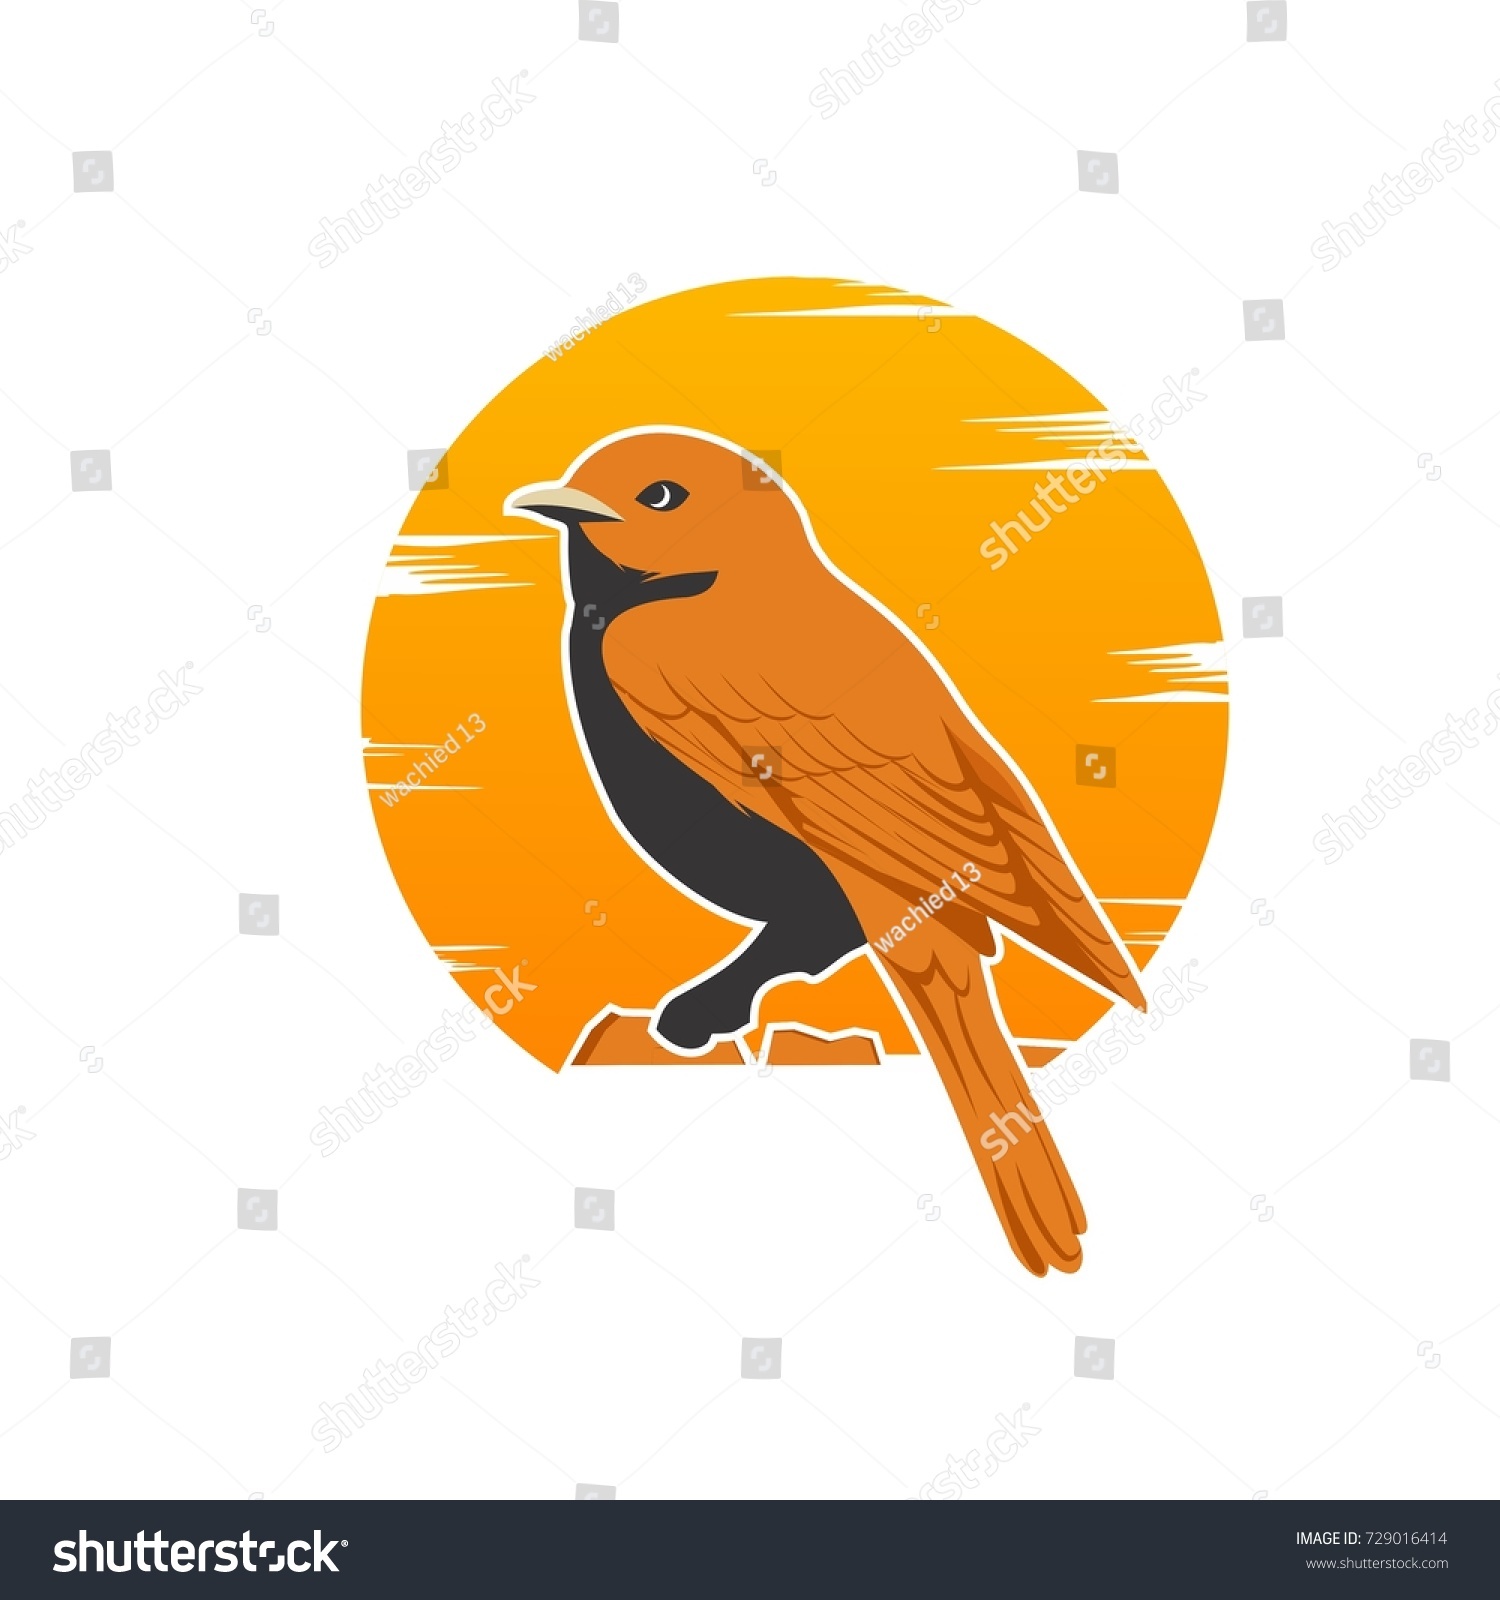 SVG of Orange Canary bird with the sun behind it, creative concept of bird logo design svg